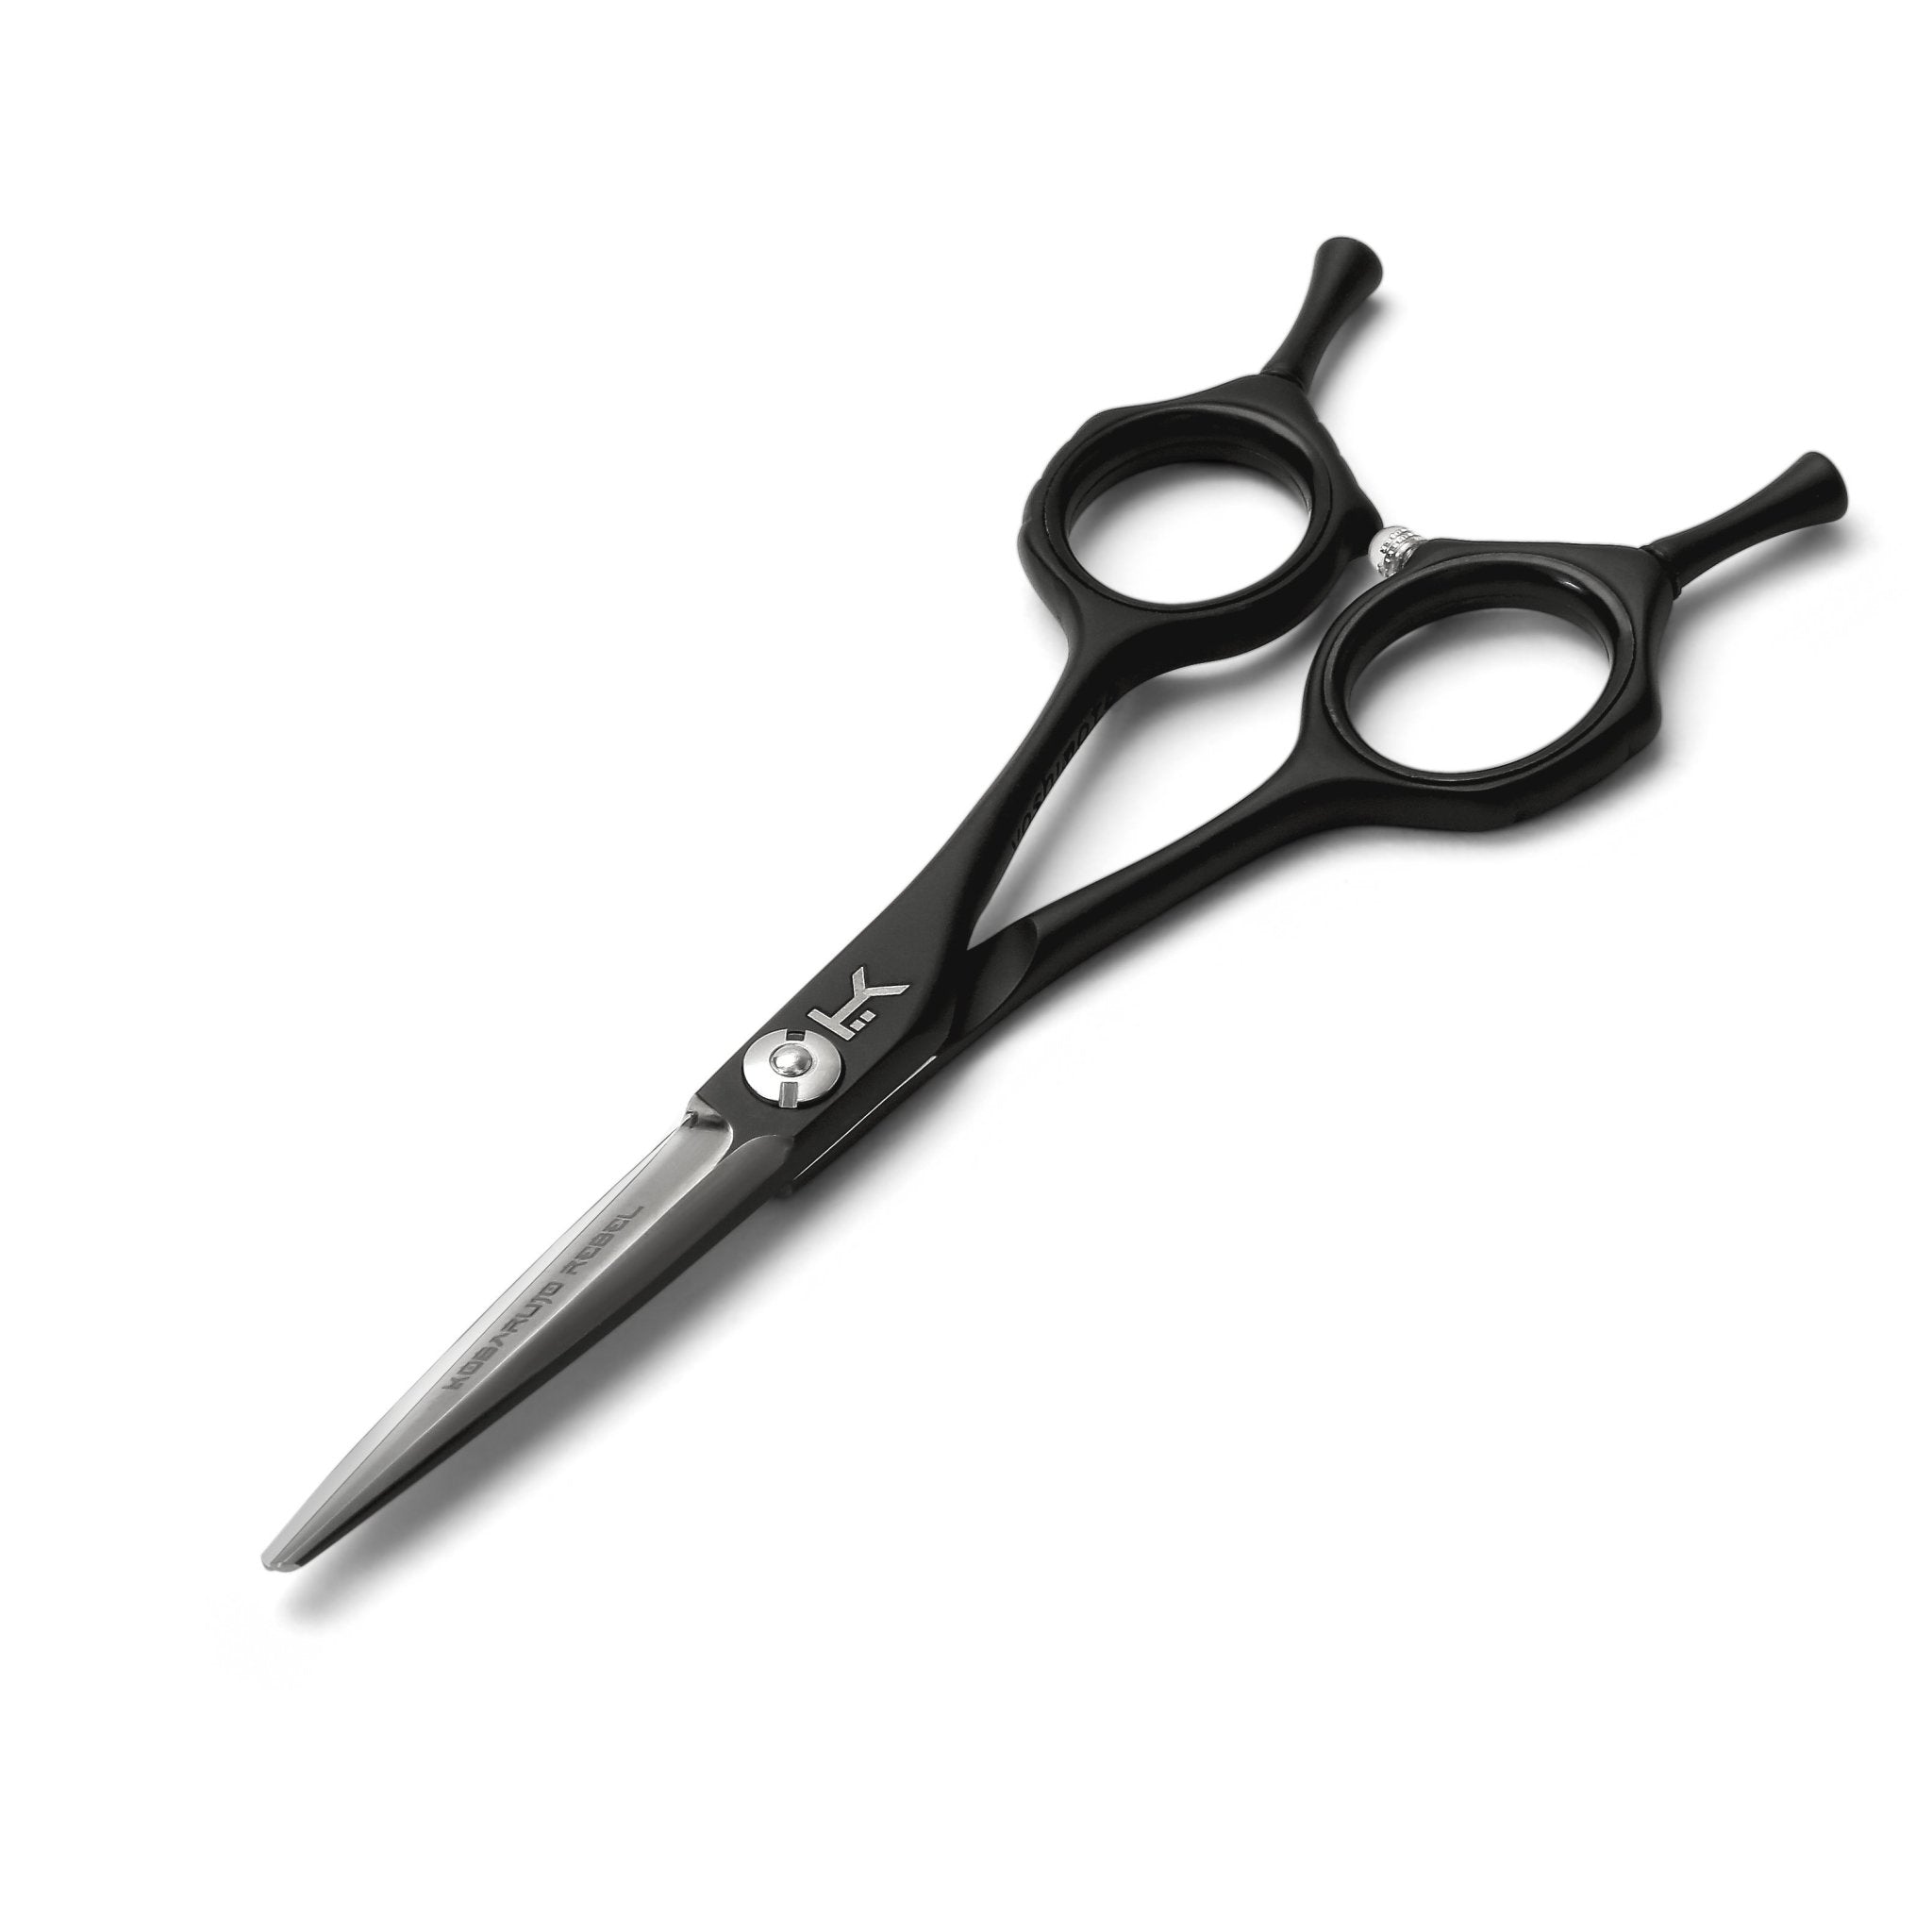 Kobaruto Rebel Professional Scissors 5 inch 440C - Beauty Hair Products Ltd